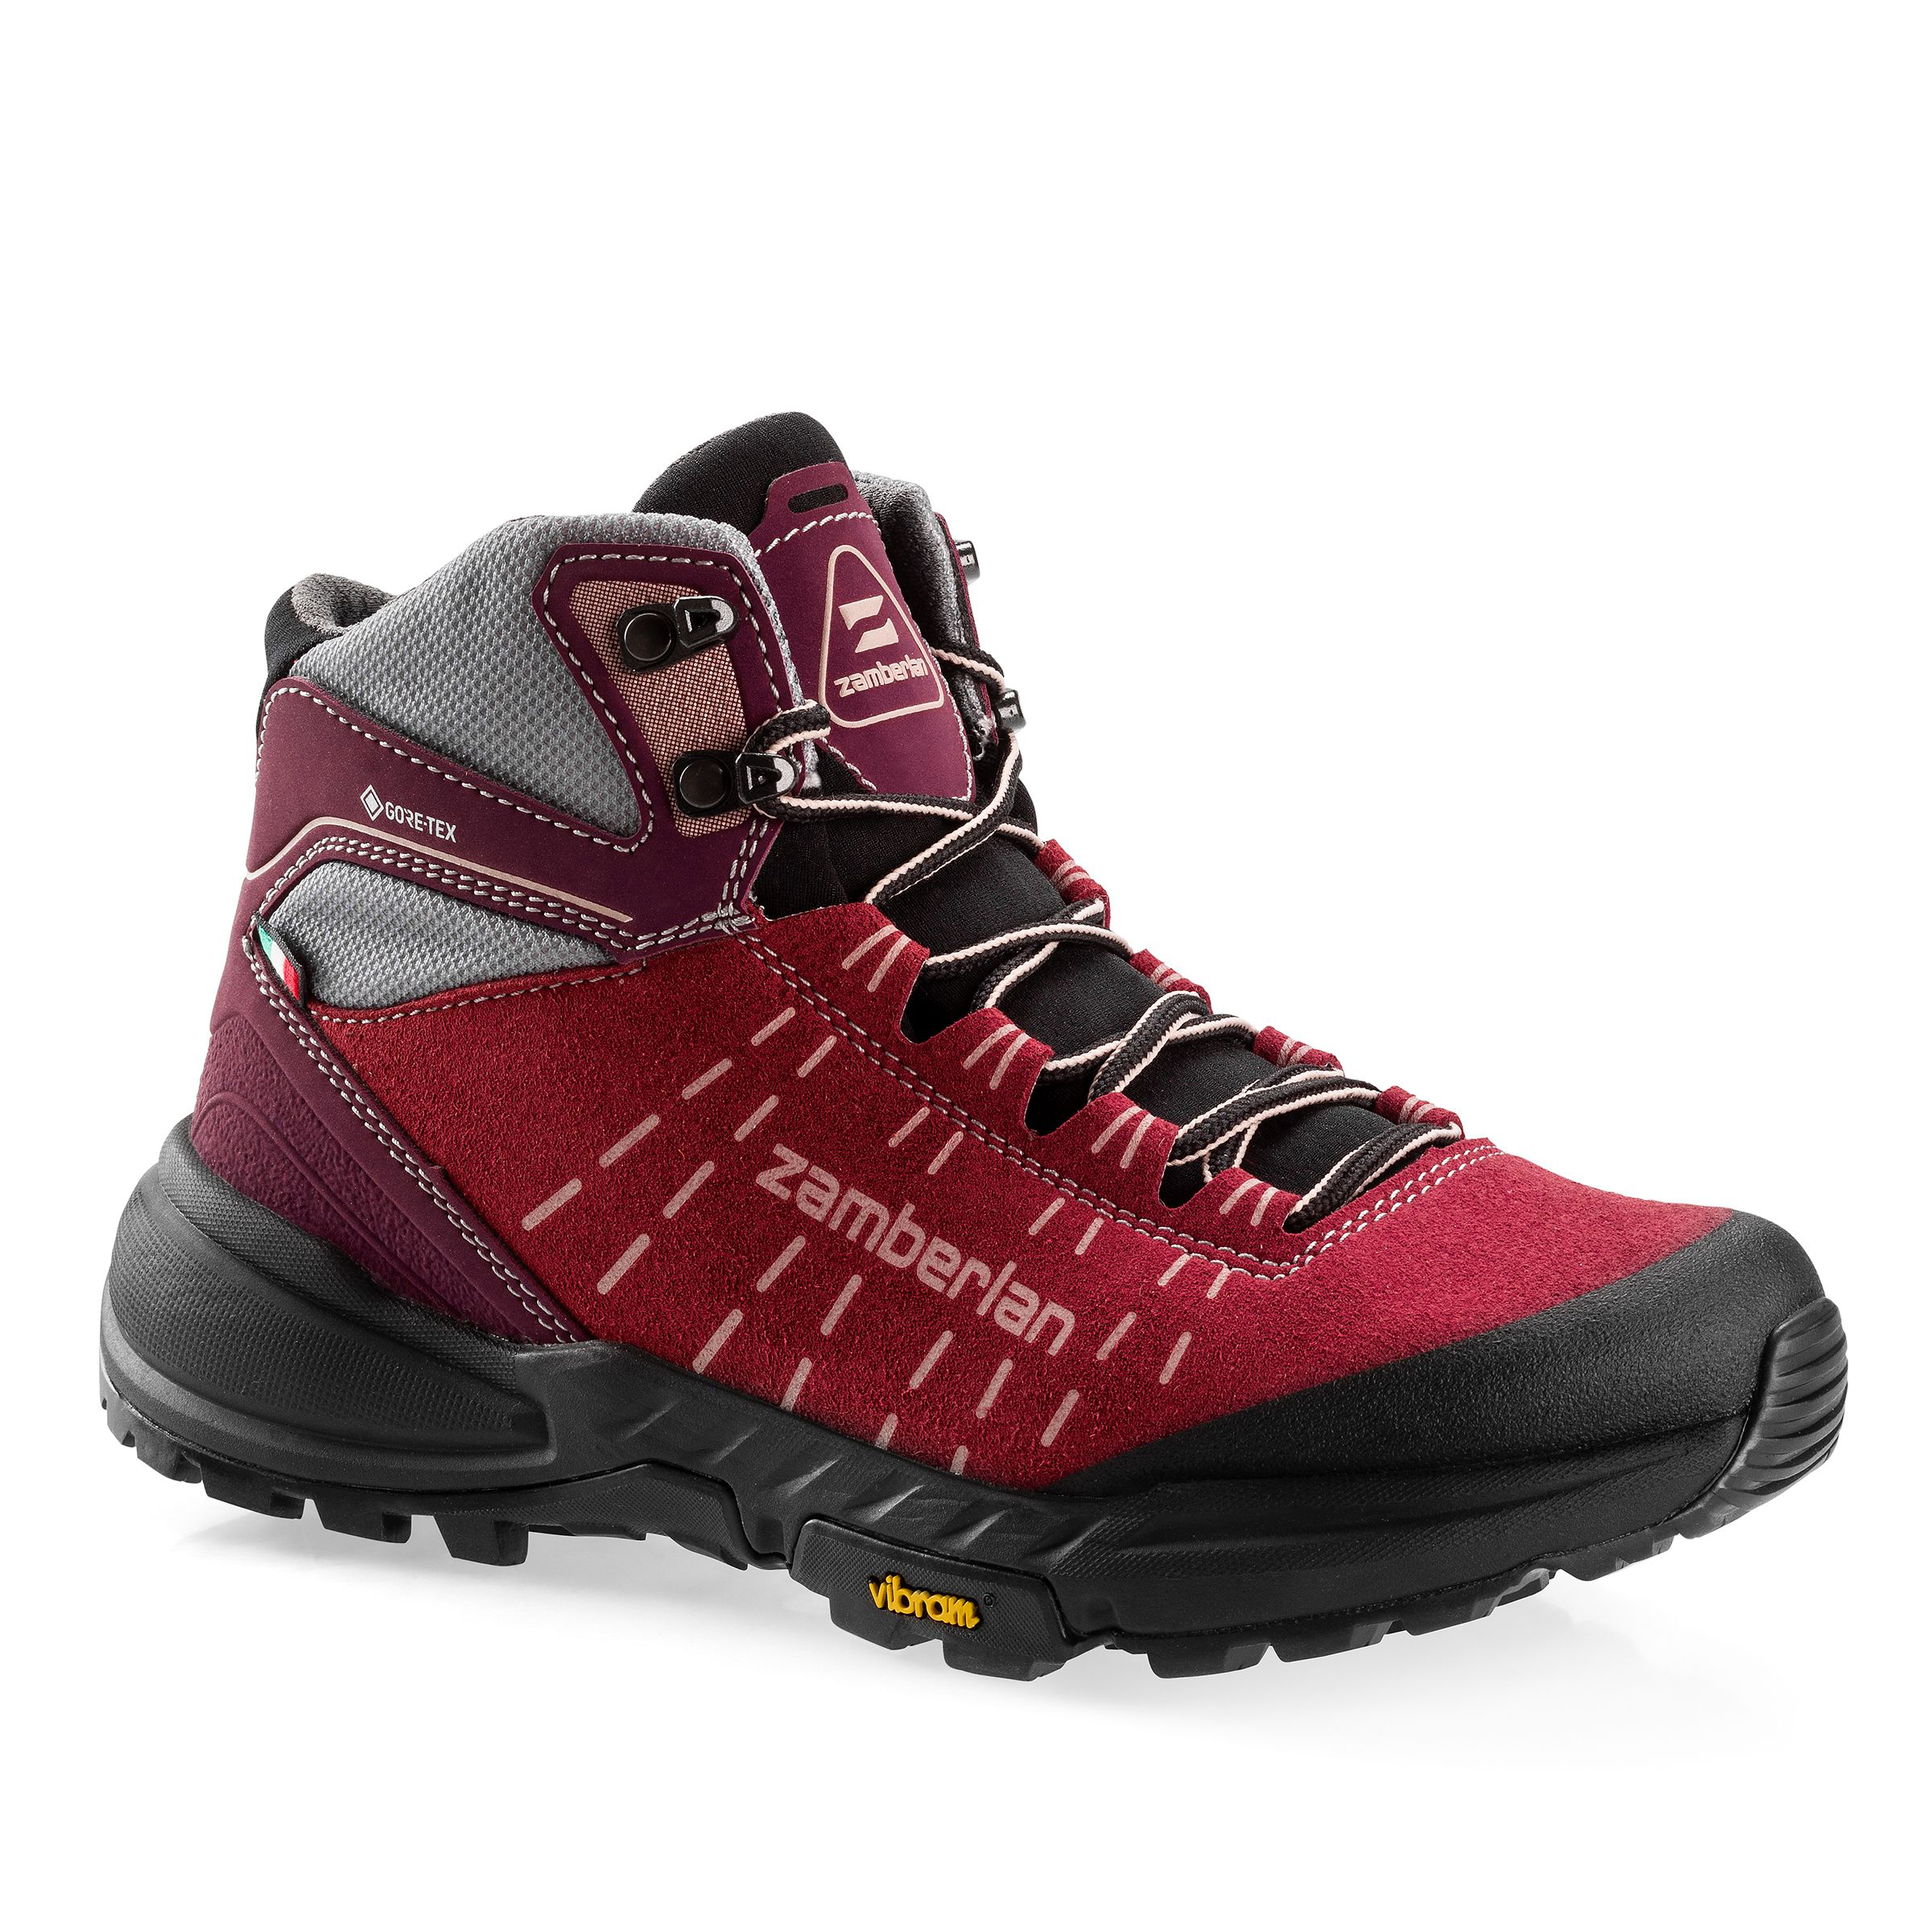 Zamberlan 334 Circe GTX Waterproof Hiking Boots for Ladies - Purple - 8.5M